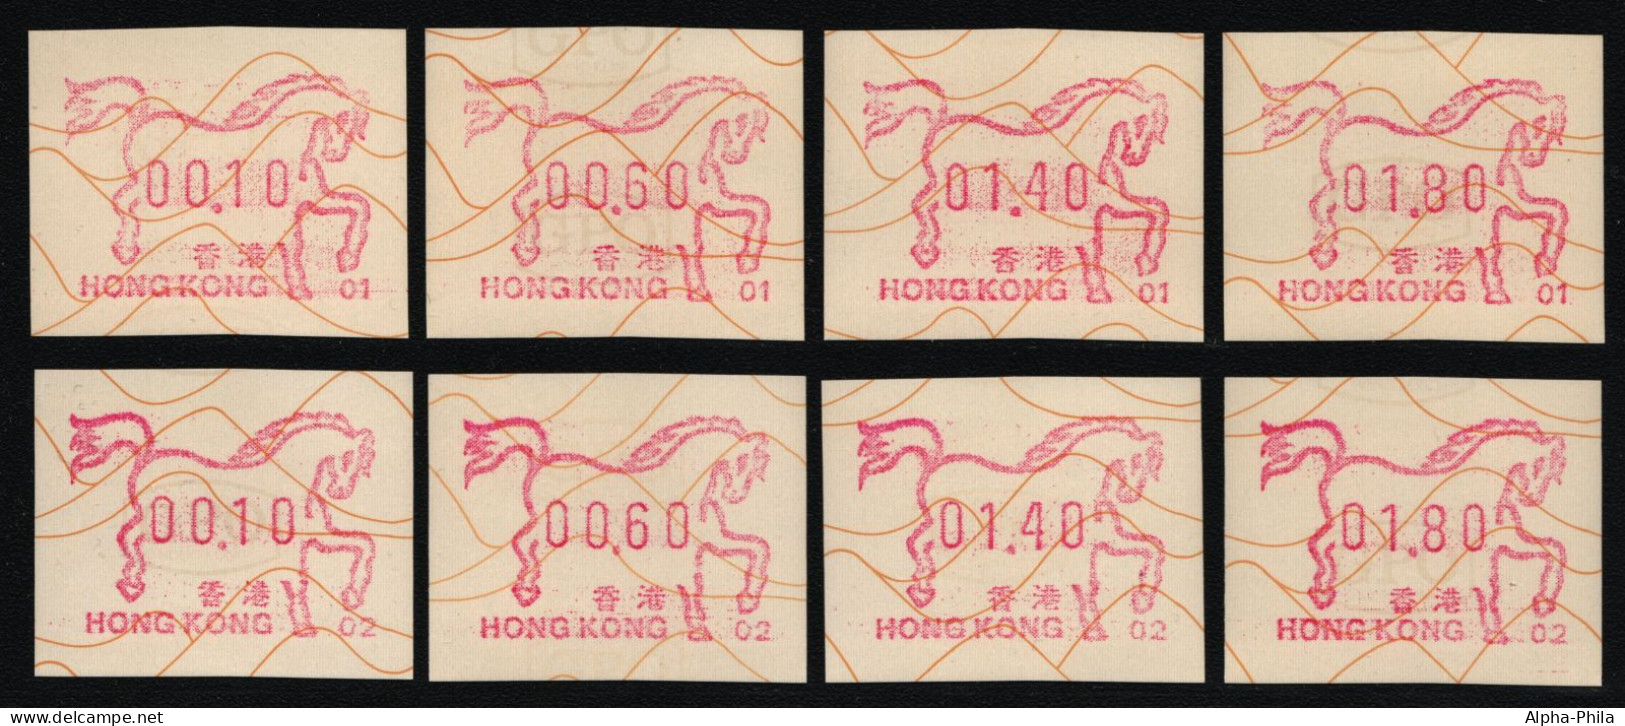 Hongkong 1990 - Mi-Nr. ATM 5 ** - MNH - Automat 01 & 02 - Je 4 Wertstufen - Distributors